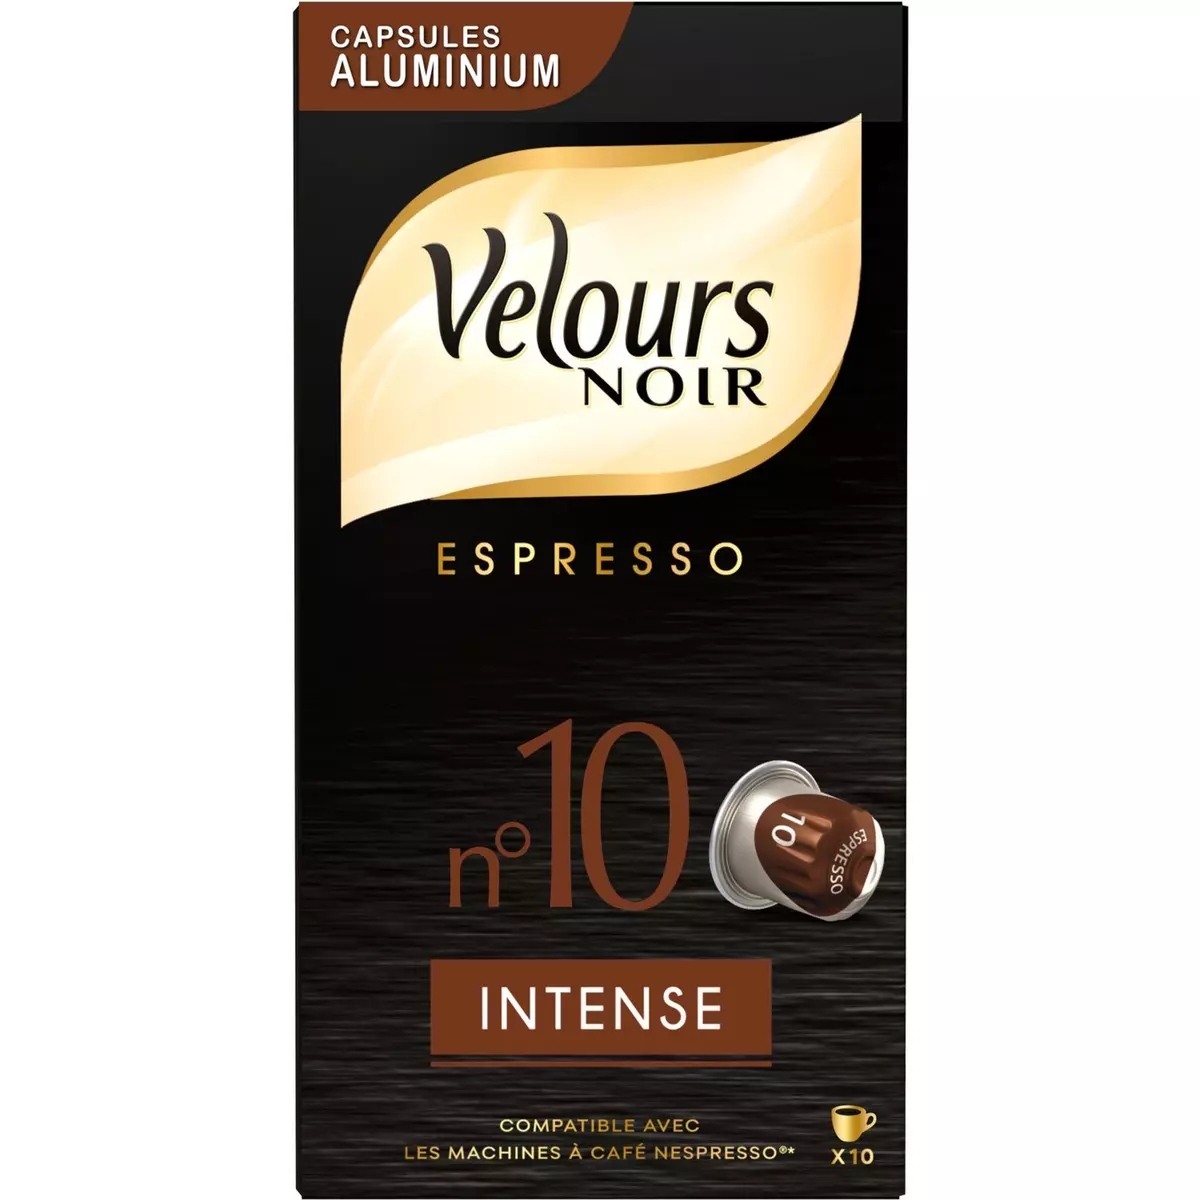 VELOURS NOIR Velours Noir café intense nespresso capsule x10 -52g